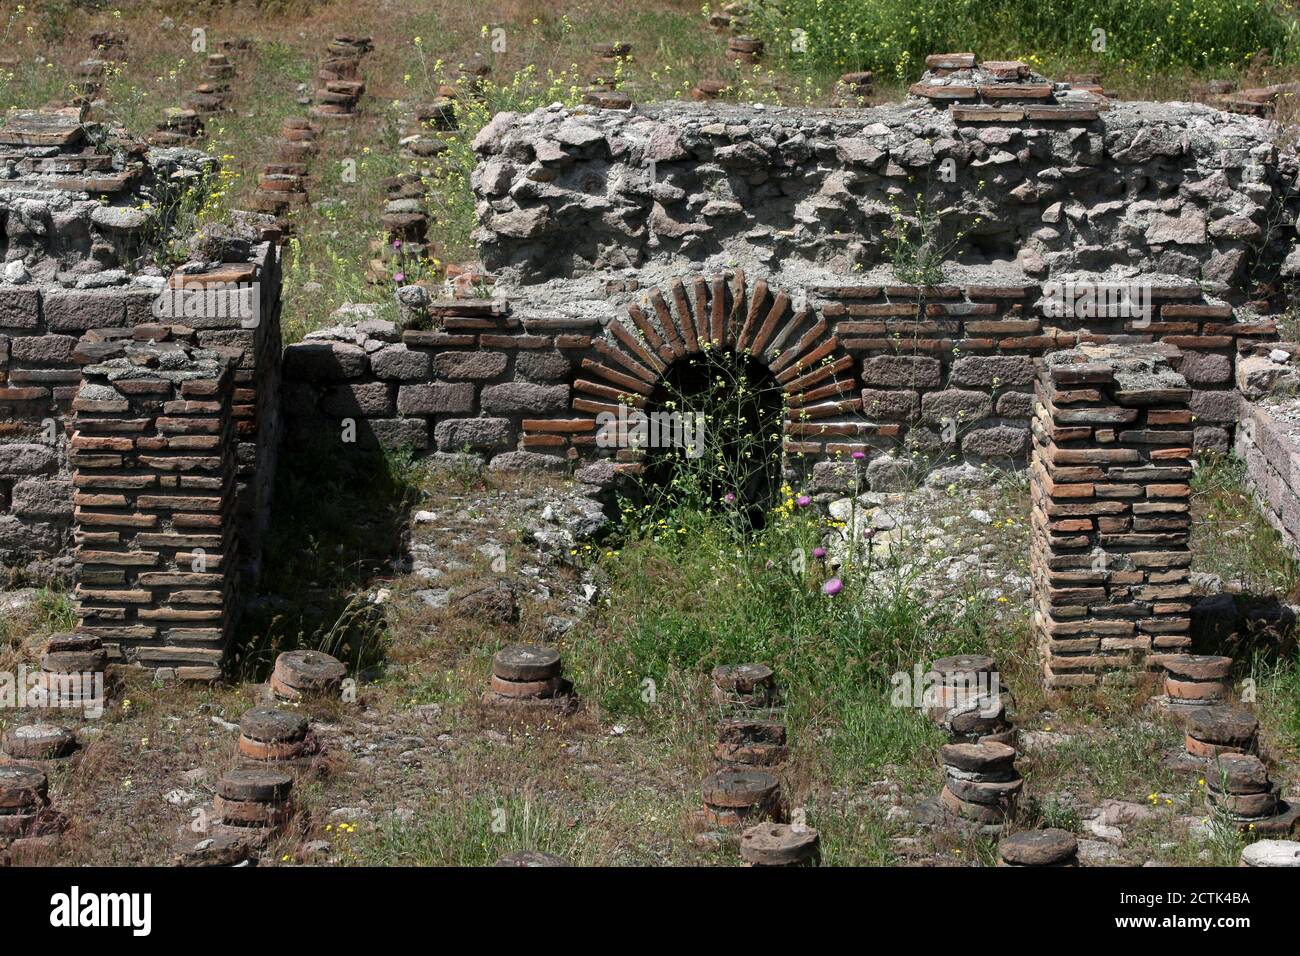 A section of the ancient Roman Bath ruins at Ankara in Turkey. The circular bricks formed the base for a subterranean subterranean heating system. Stock Photo